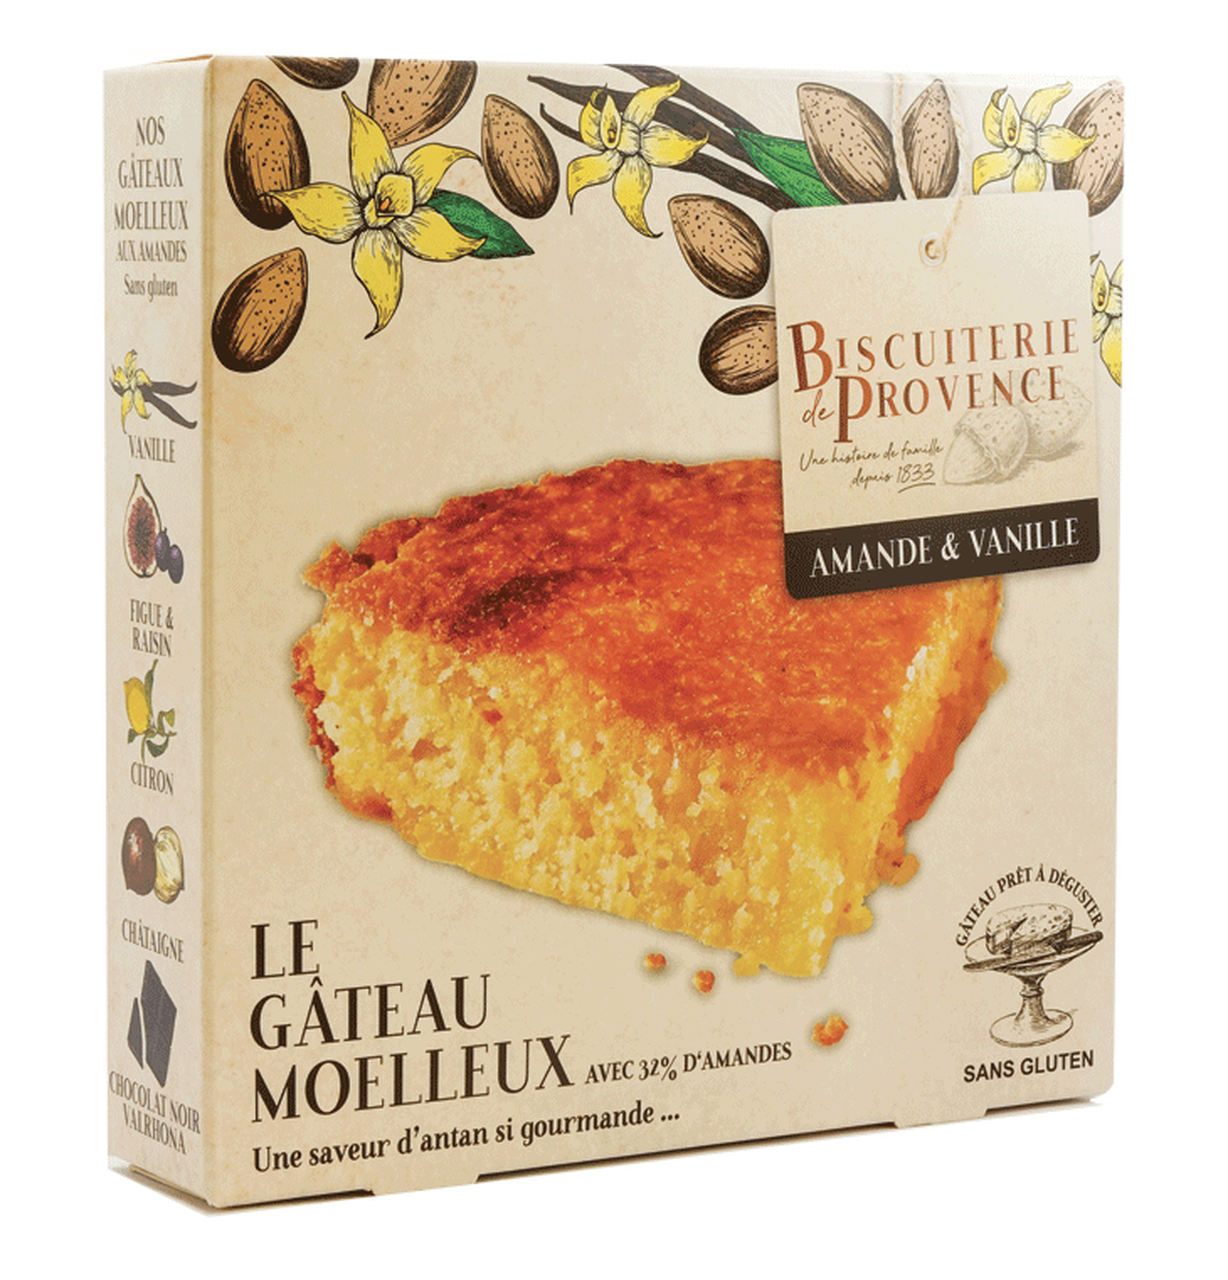 Biscuiterie de Provence Almond and Vanilla Cake, Gluten Free, 8.5 oz.